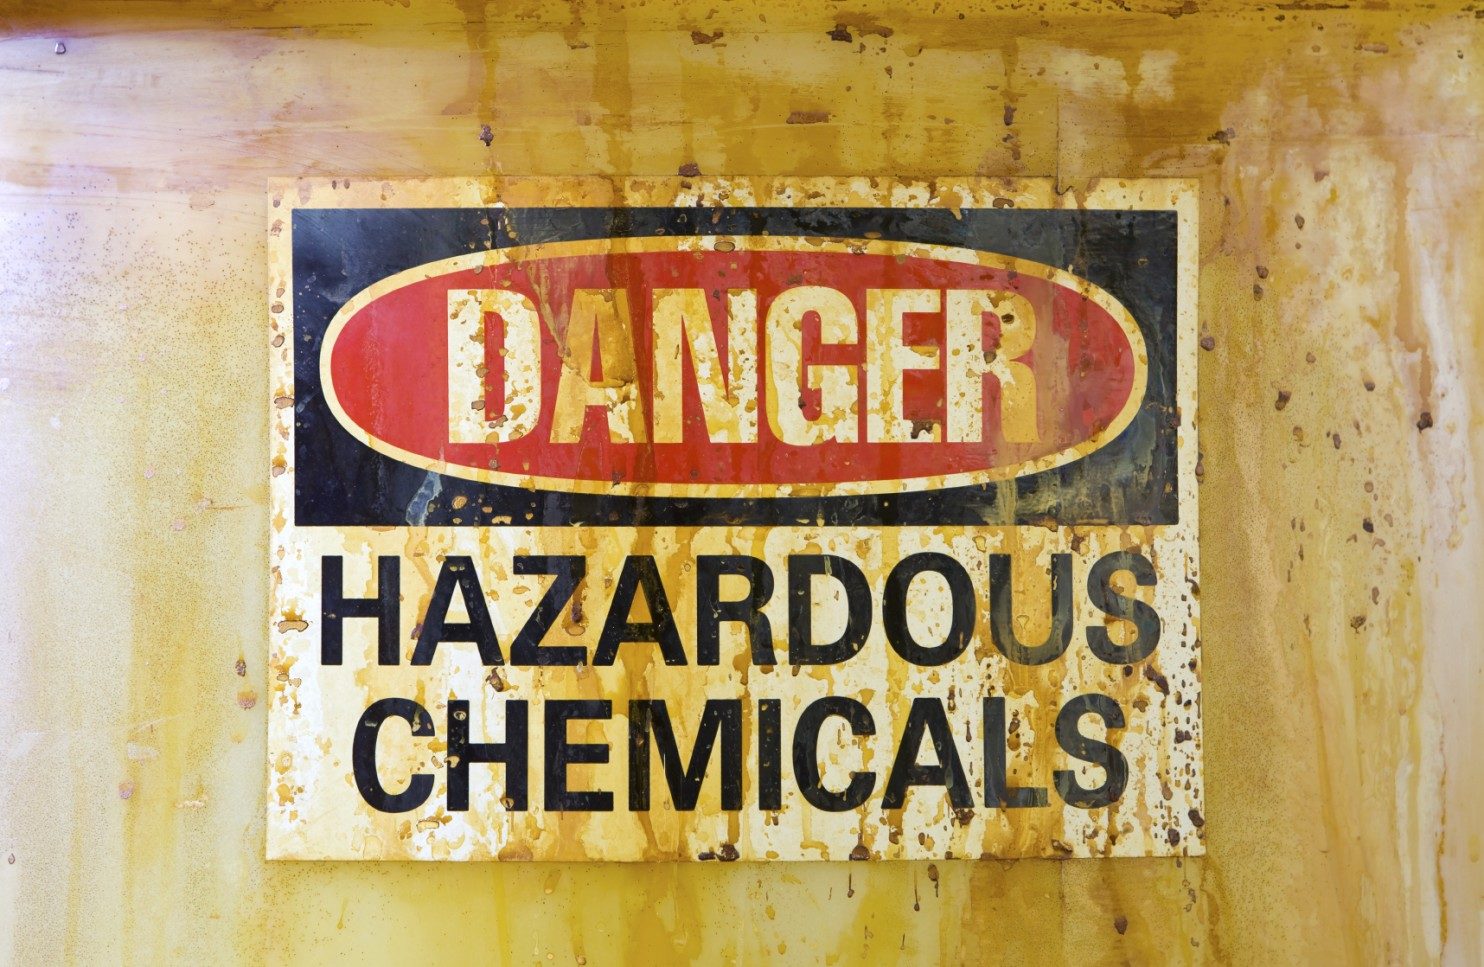 chemical exposure